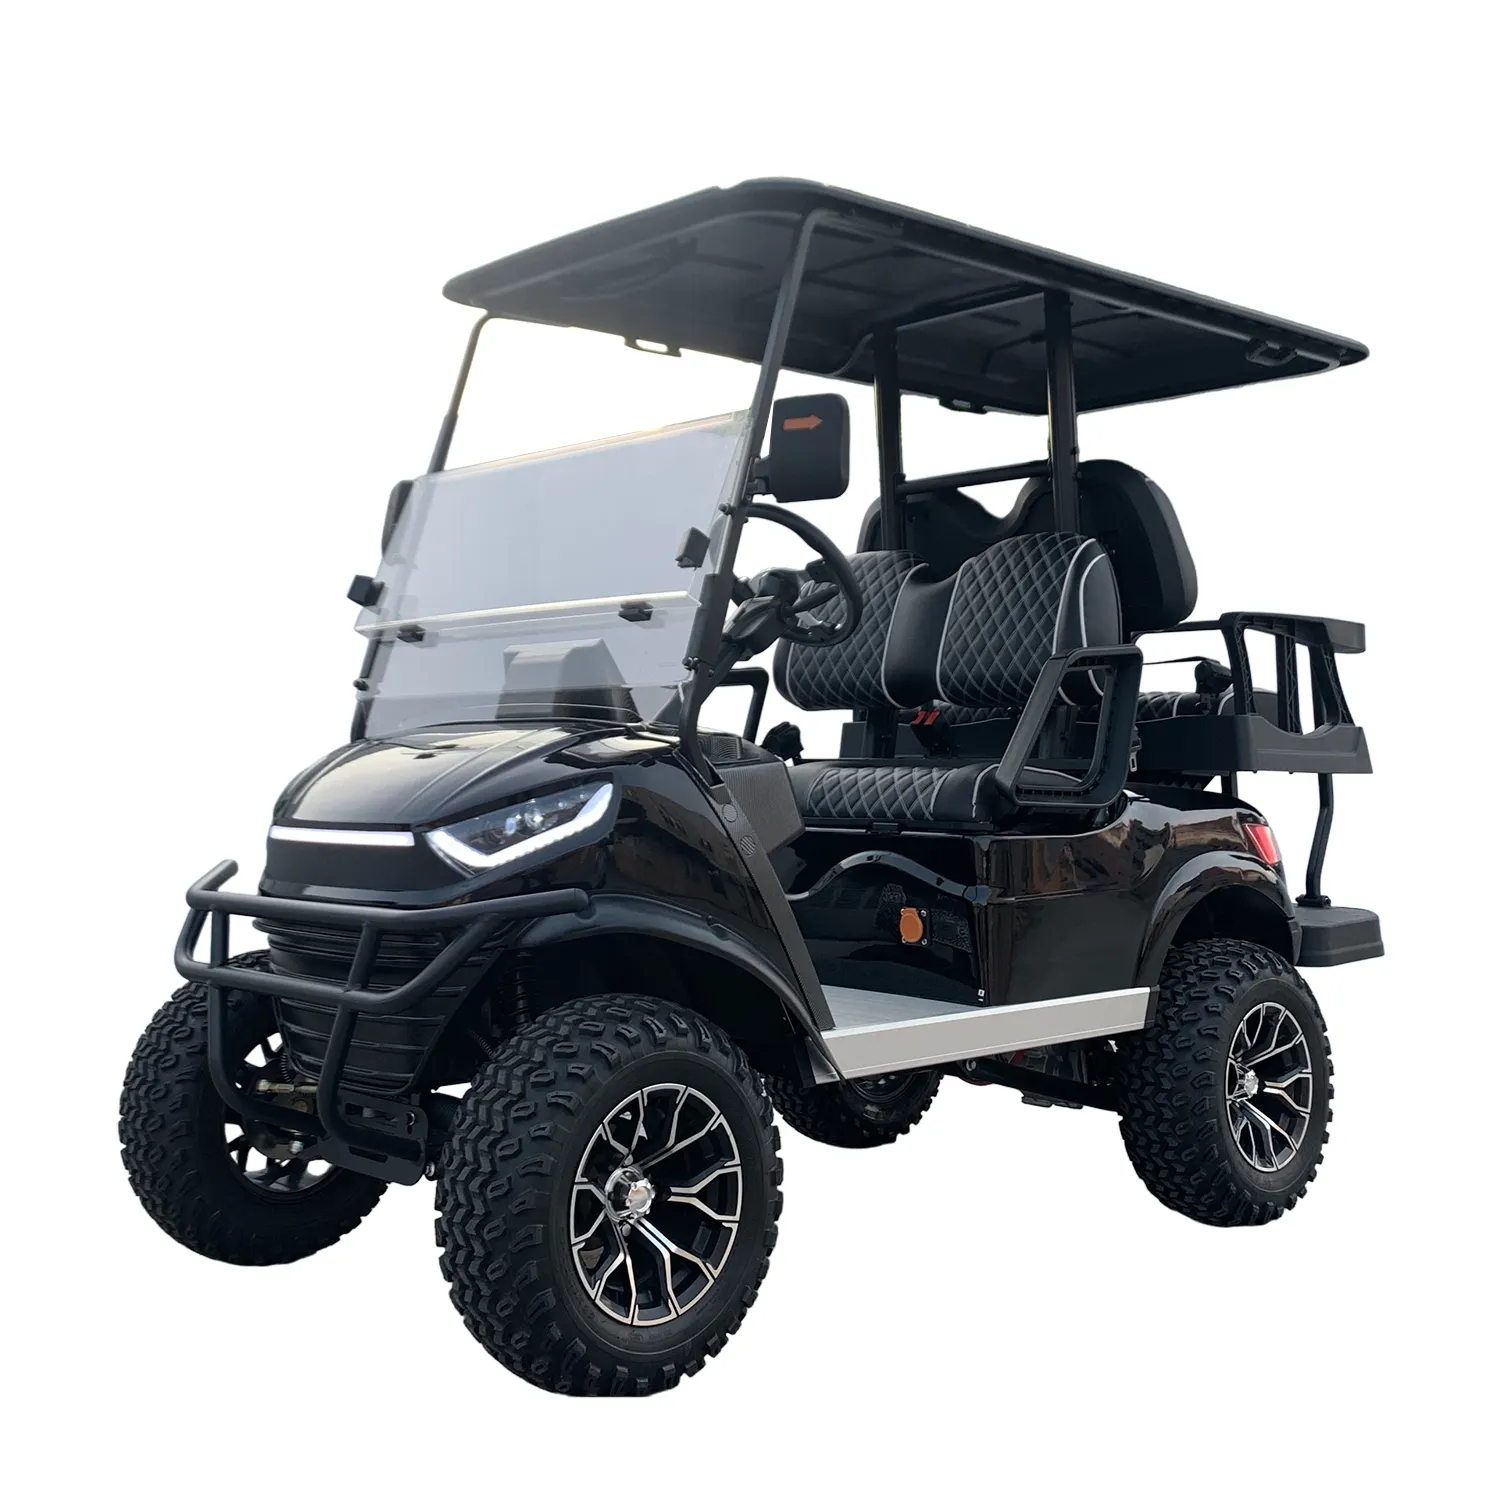 Rosa mercato usa mmc vintage solare 2 posti 10 6 4 posti 4 ruote golf cart corpo reso cinese via legale